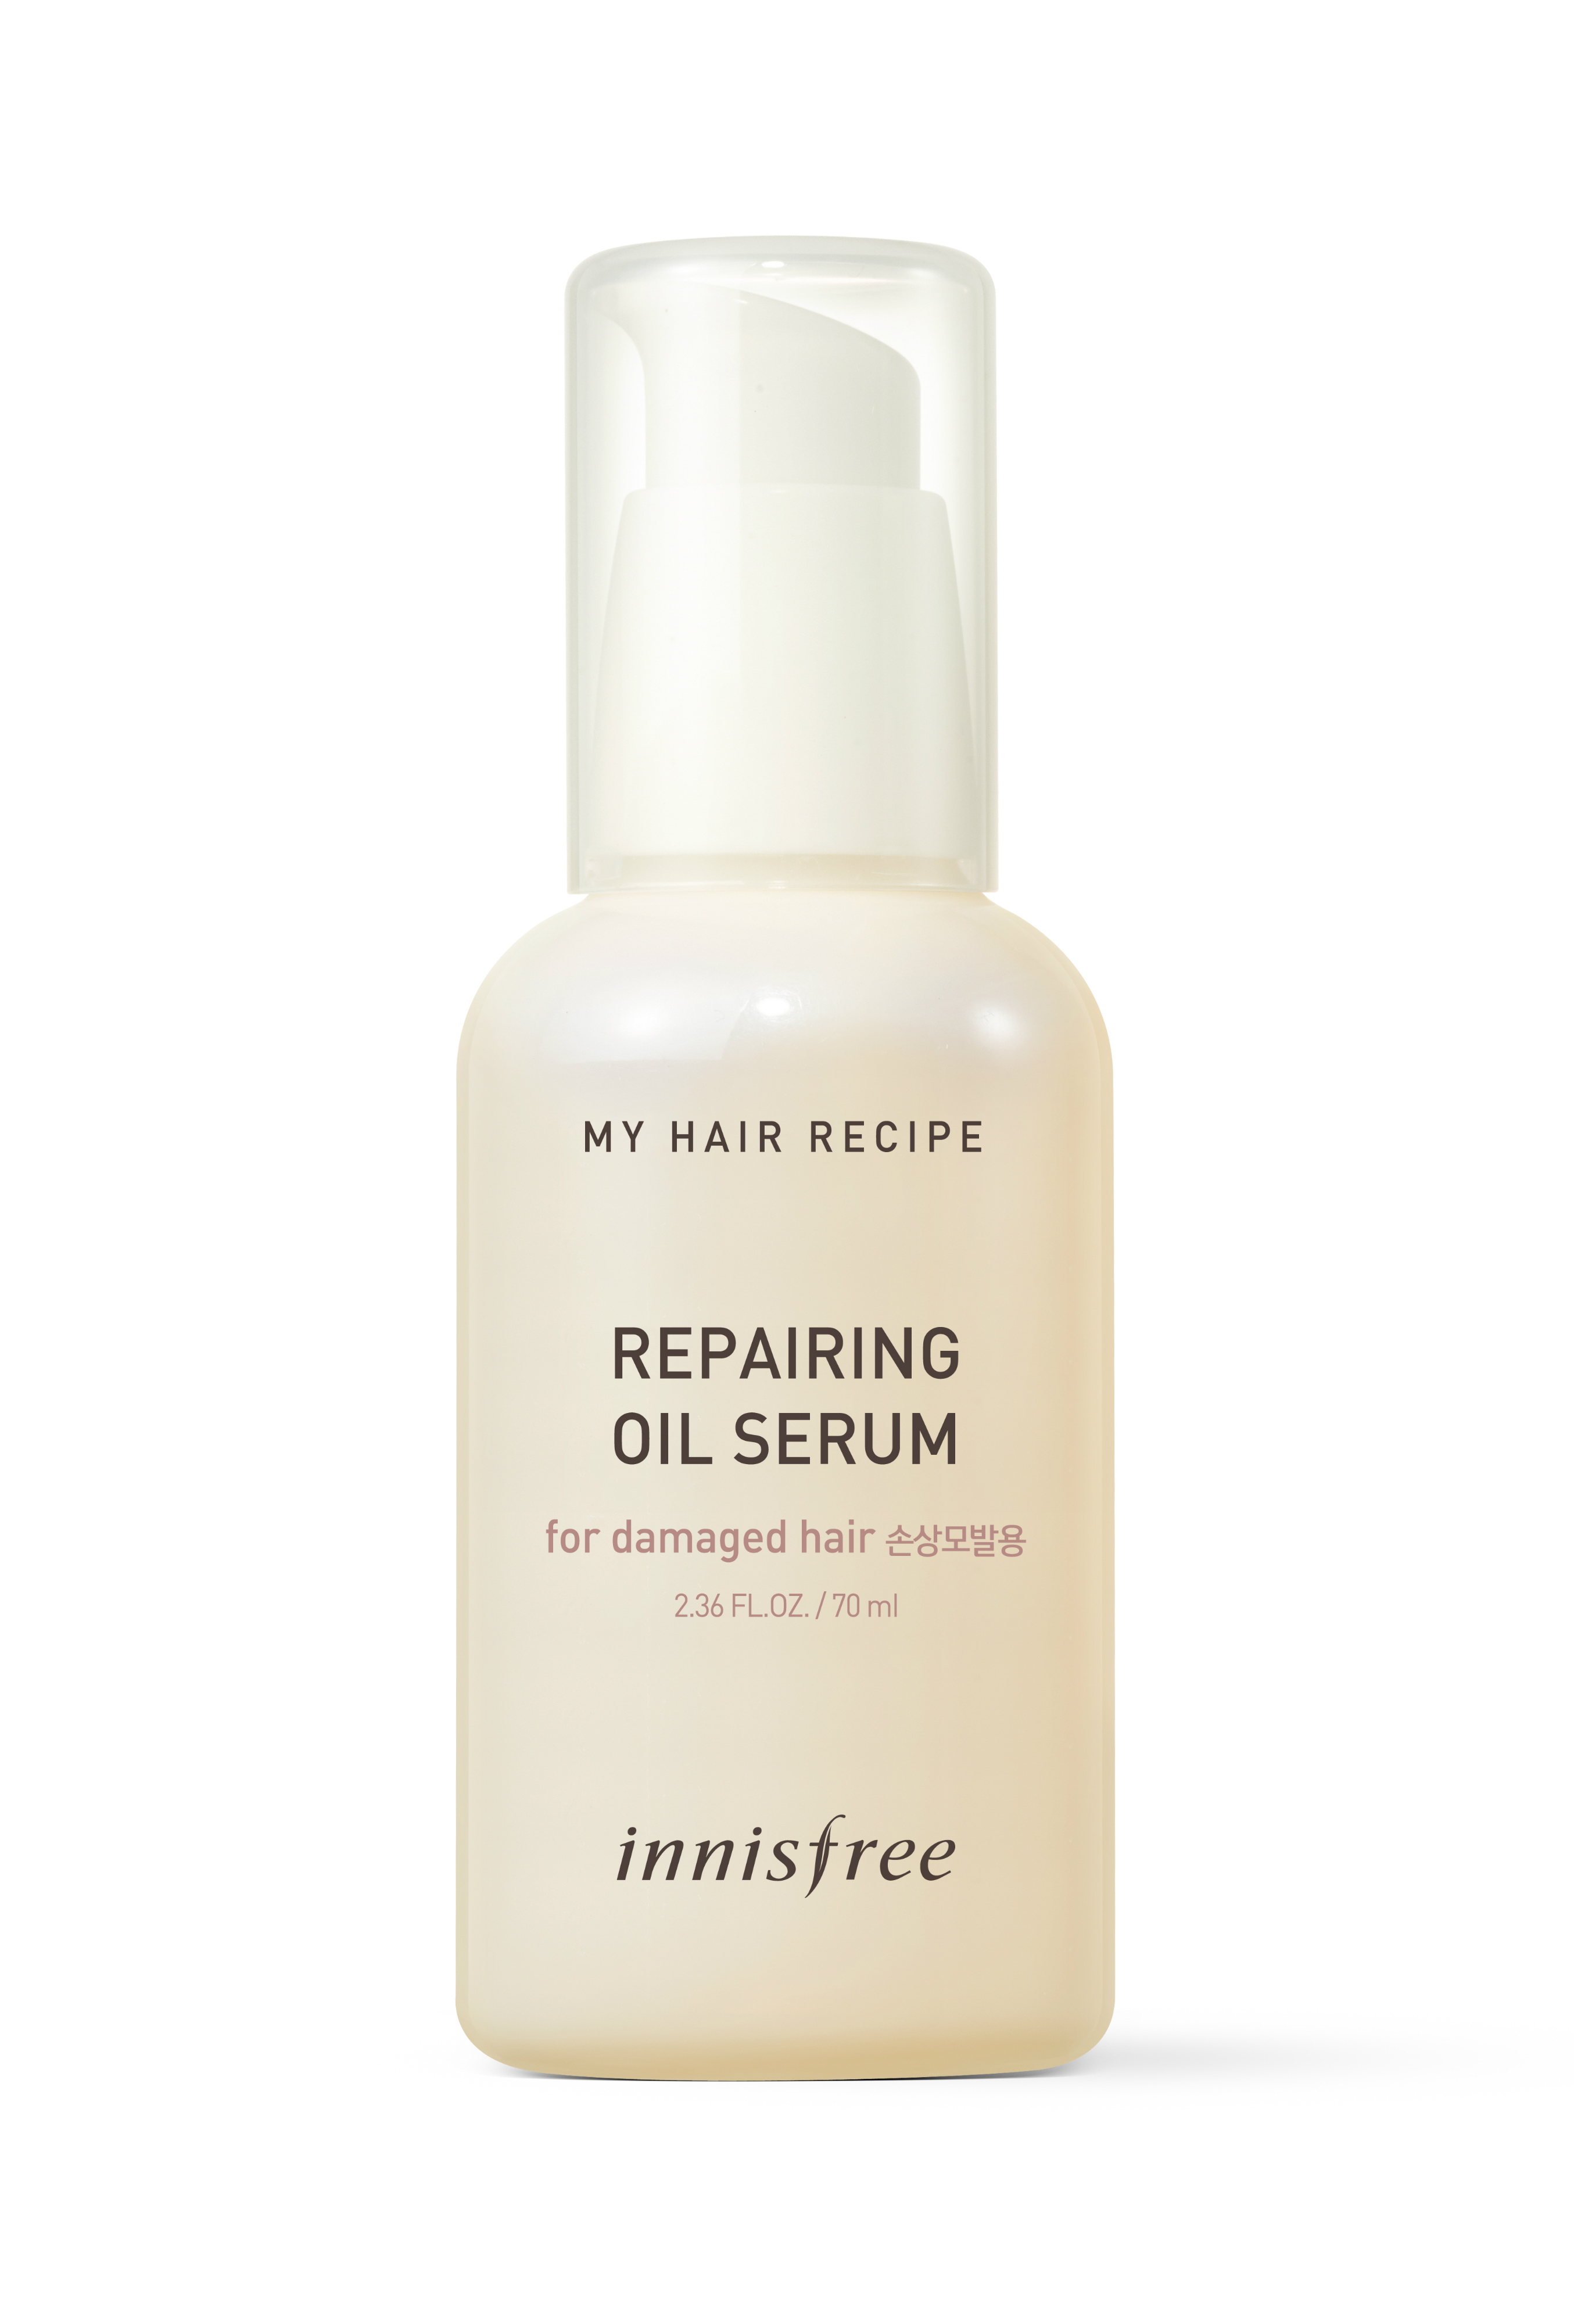 innisfree My Hair Recipe Repairing Oil Serum (RM58.00/70ml)-Pamper.my